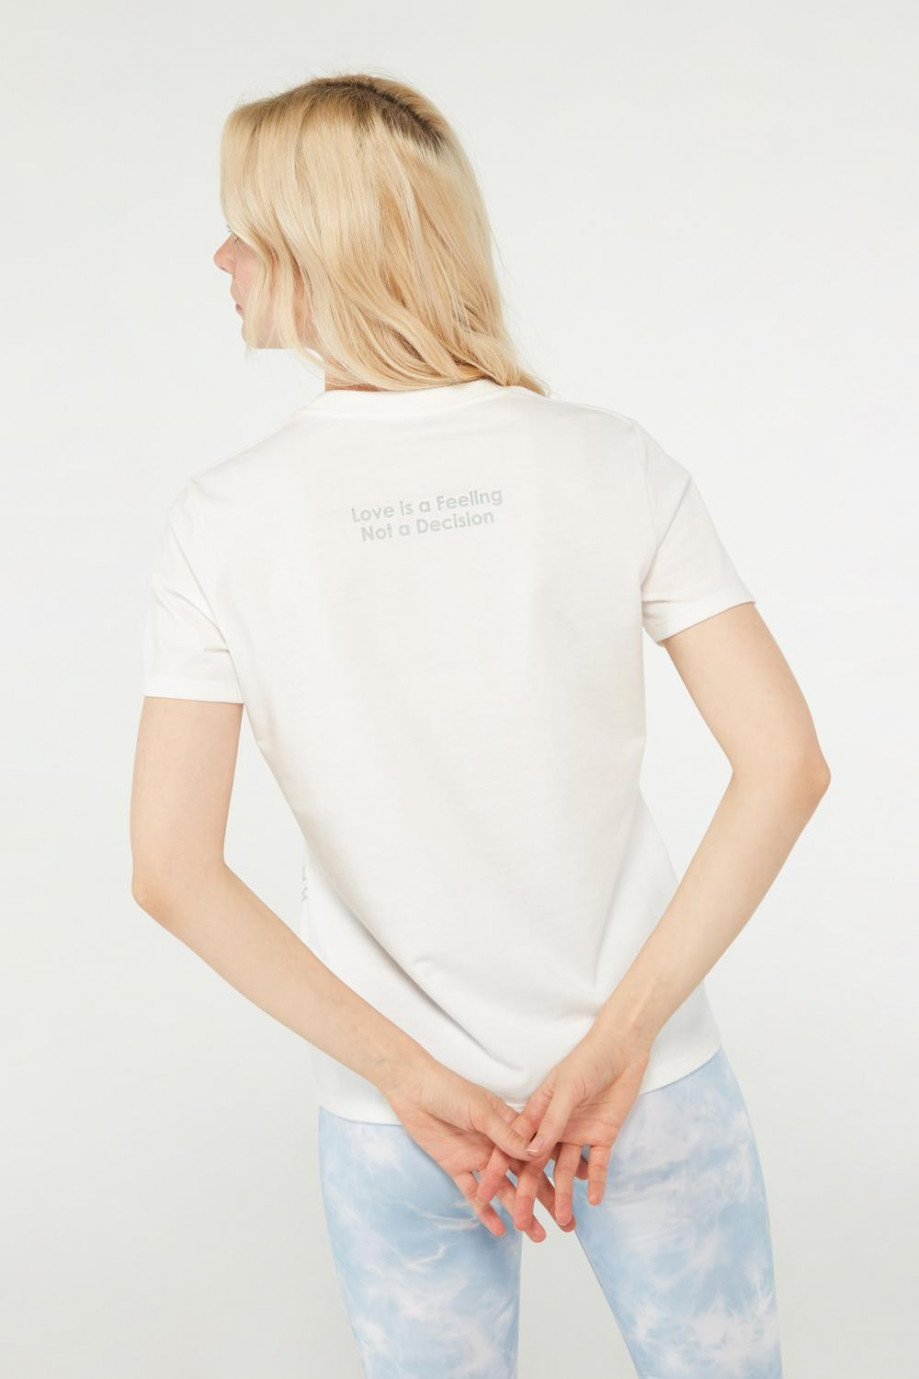 Camiseta crema claro manga corta con estampado en frente